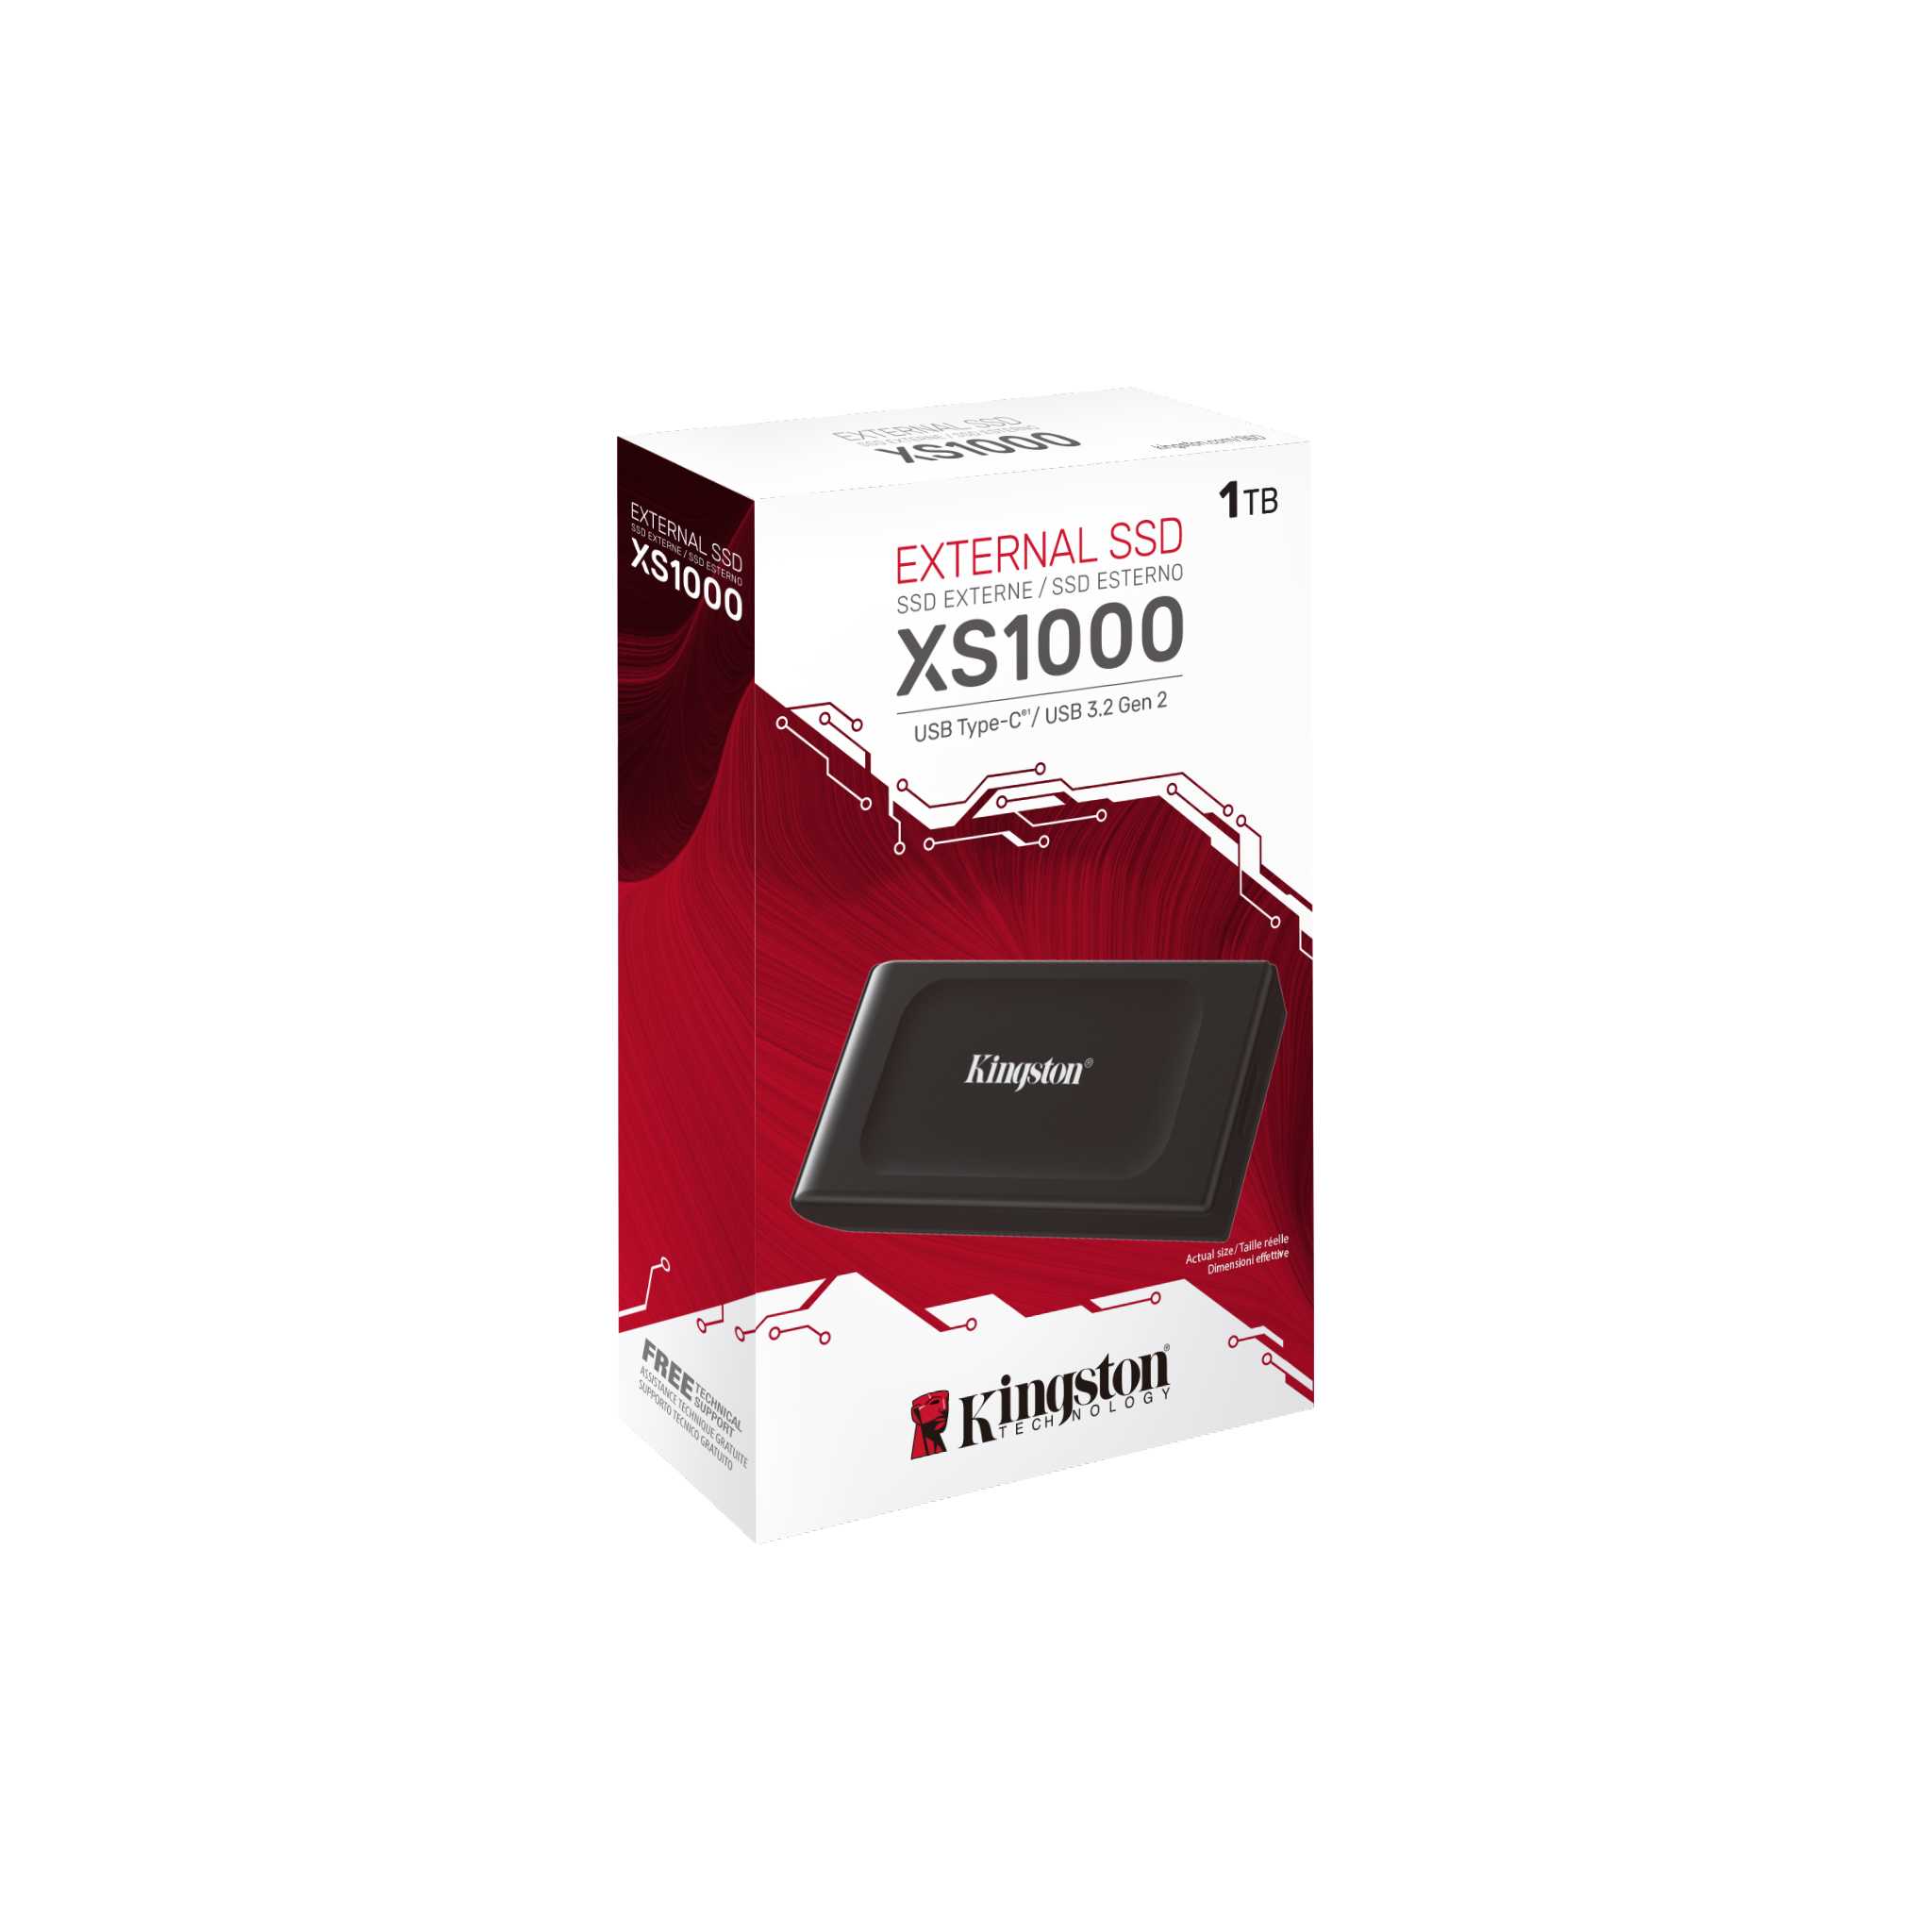 Kingston XS1000 External Solid State Drive (SSD) - 1TB